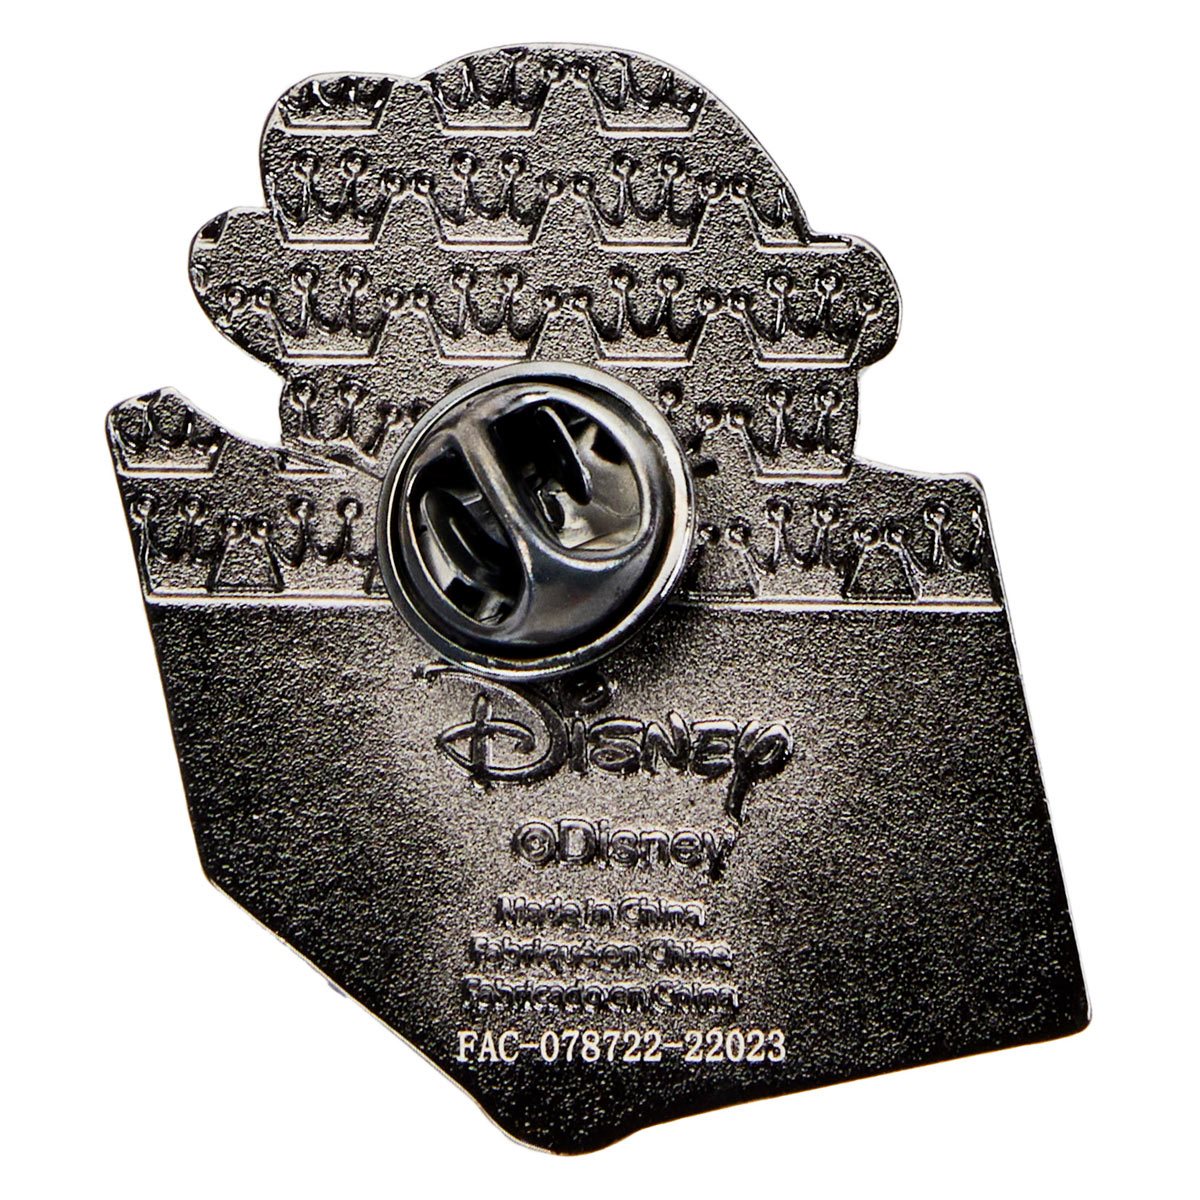 Alice in Wonderland Loungefly Blind Box Pin Set - Disney Pins Blog